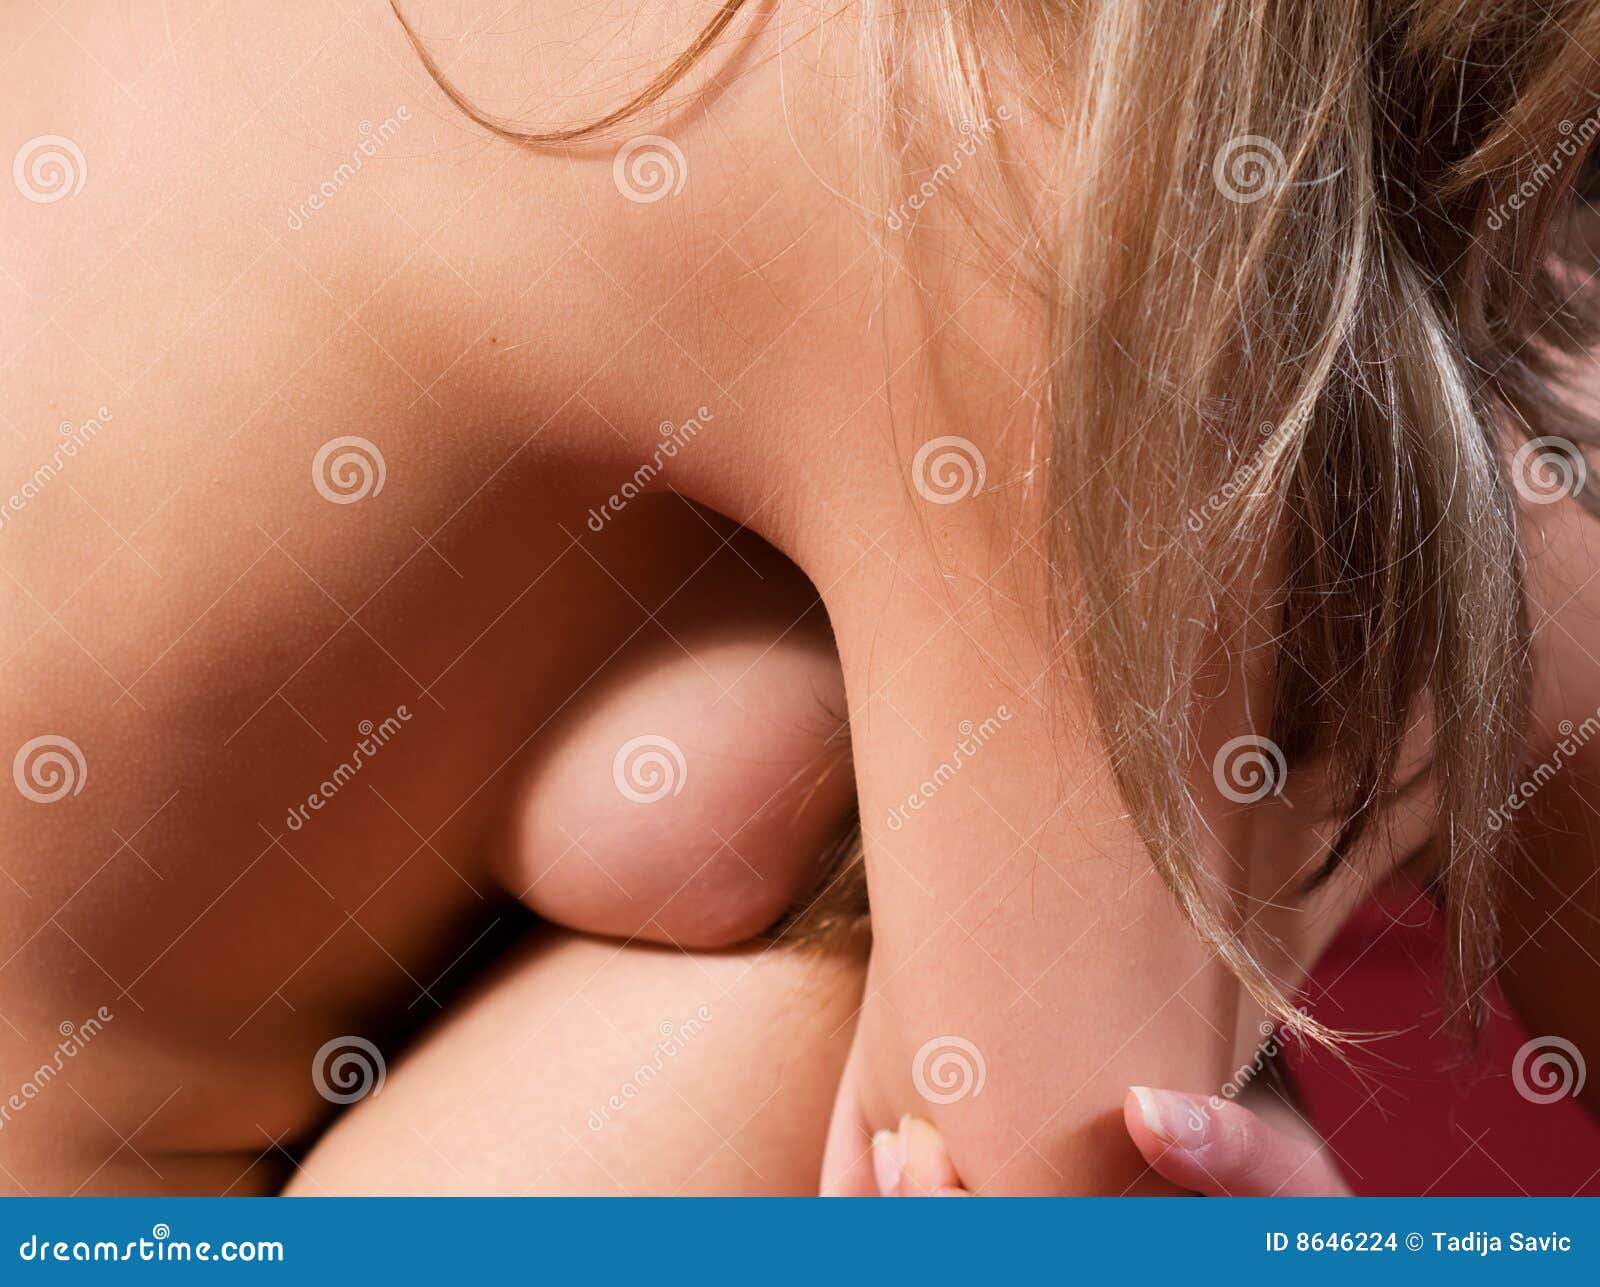 Beautiful nipple picture